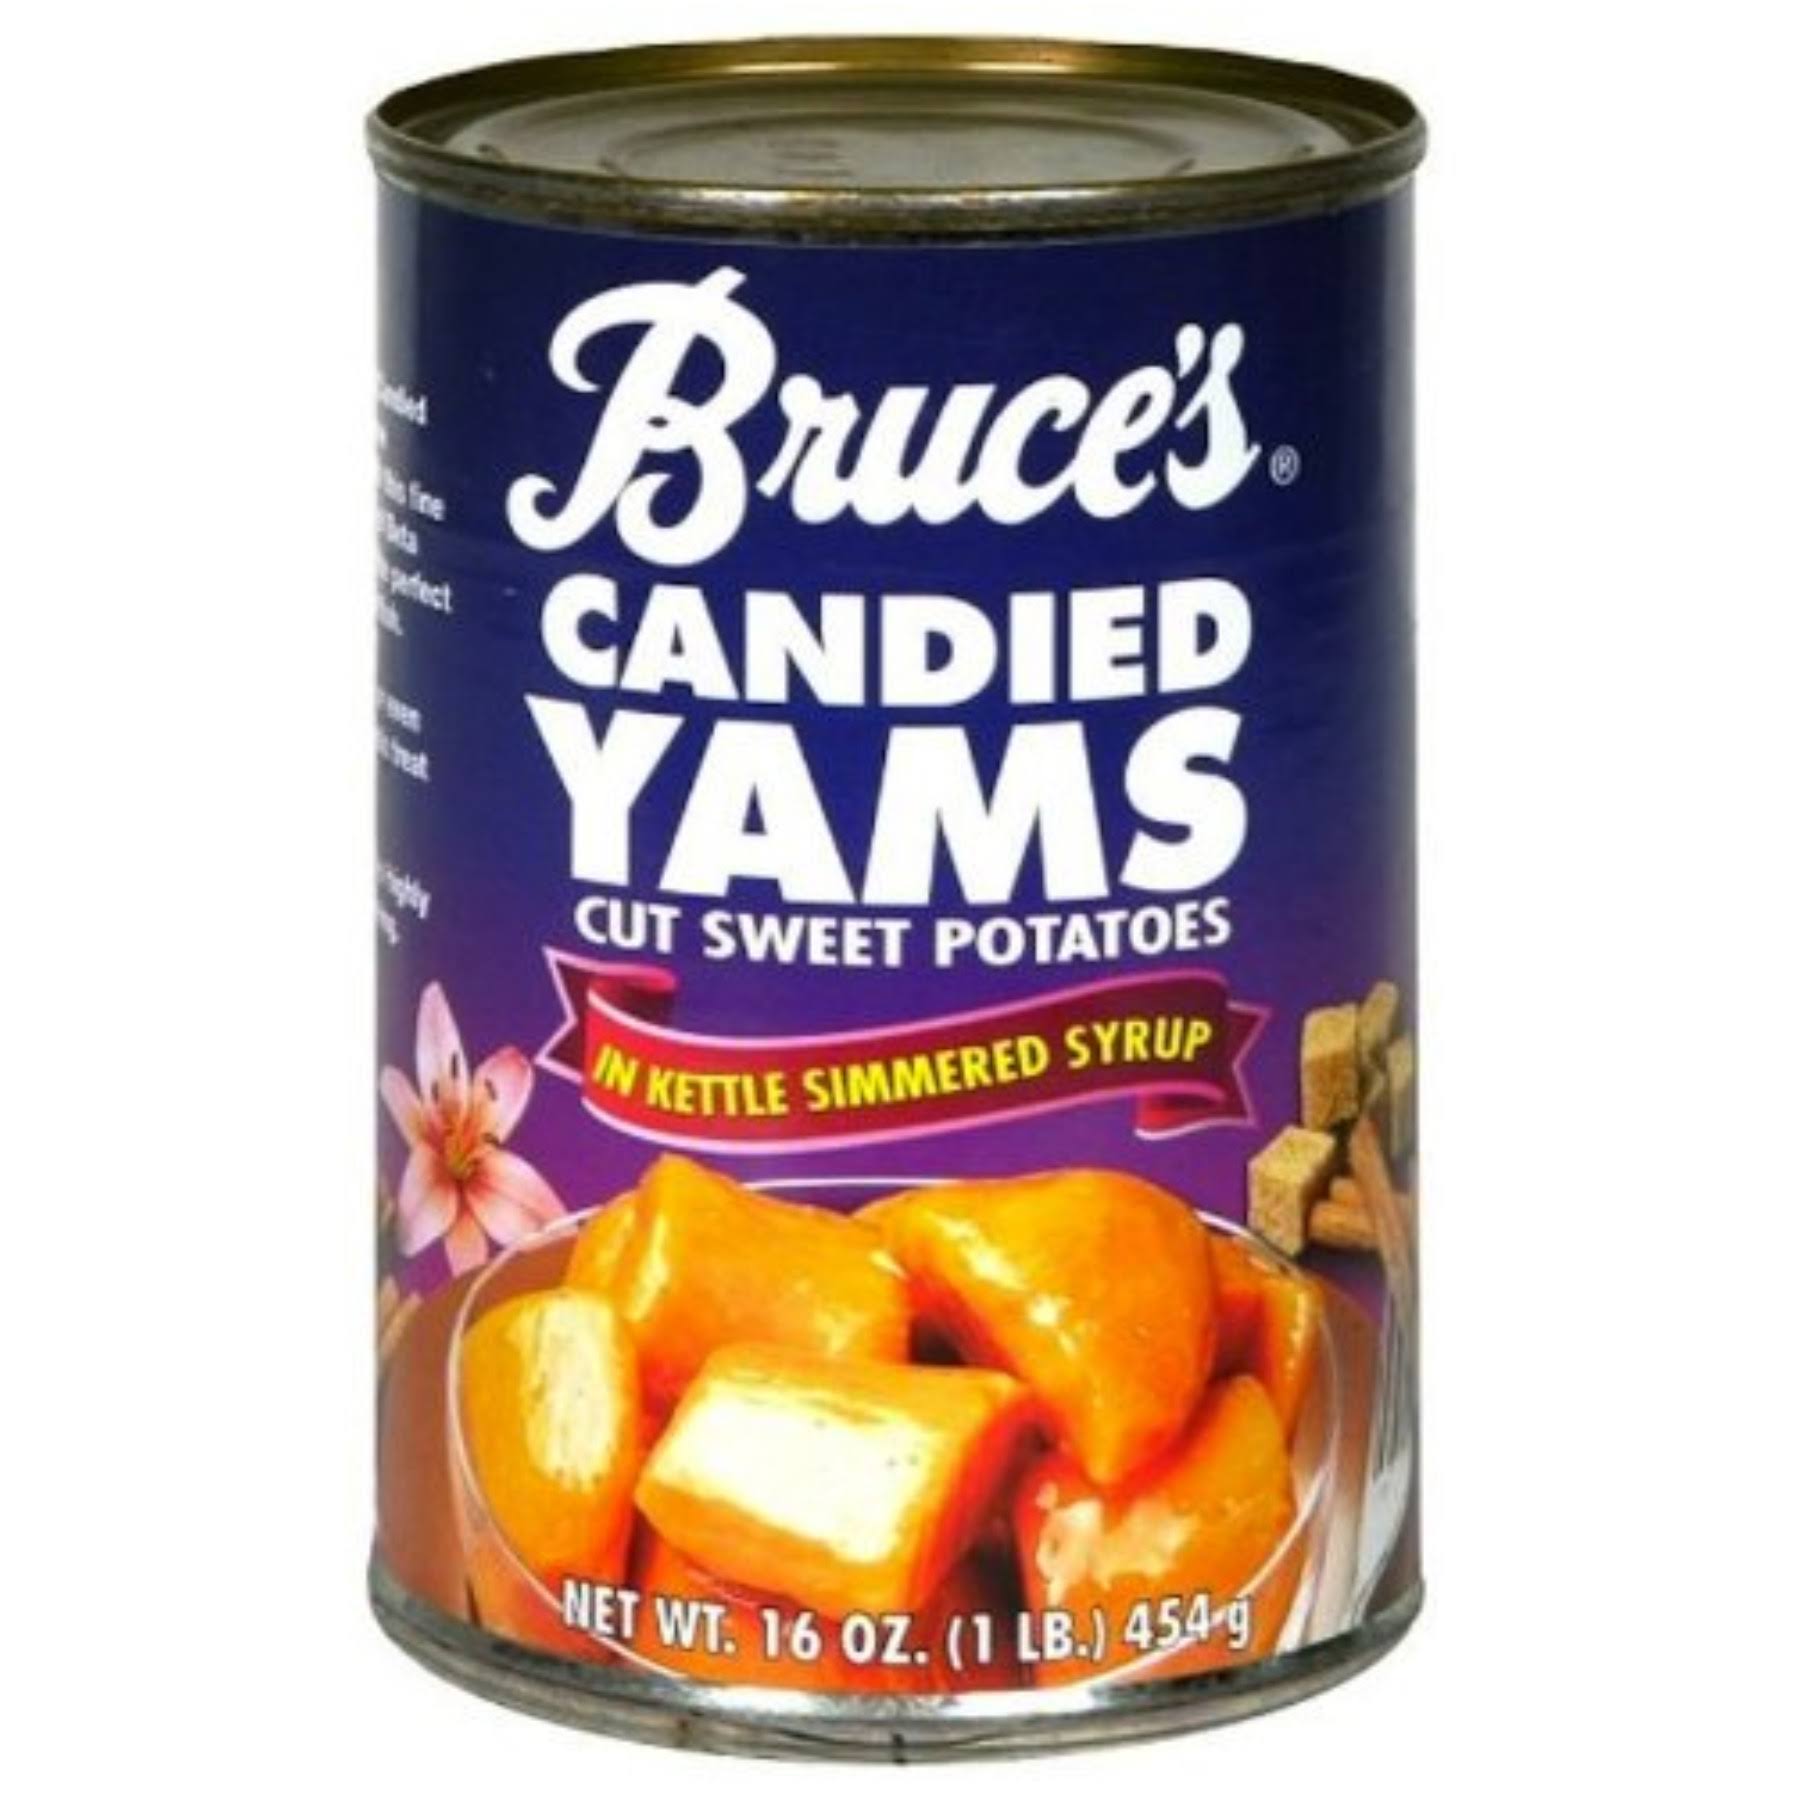 Bruce's Candied Yams Cut Sweet Potatoes - 16oz